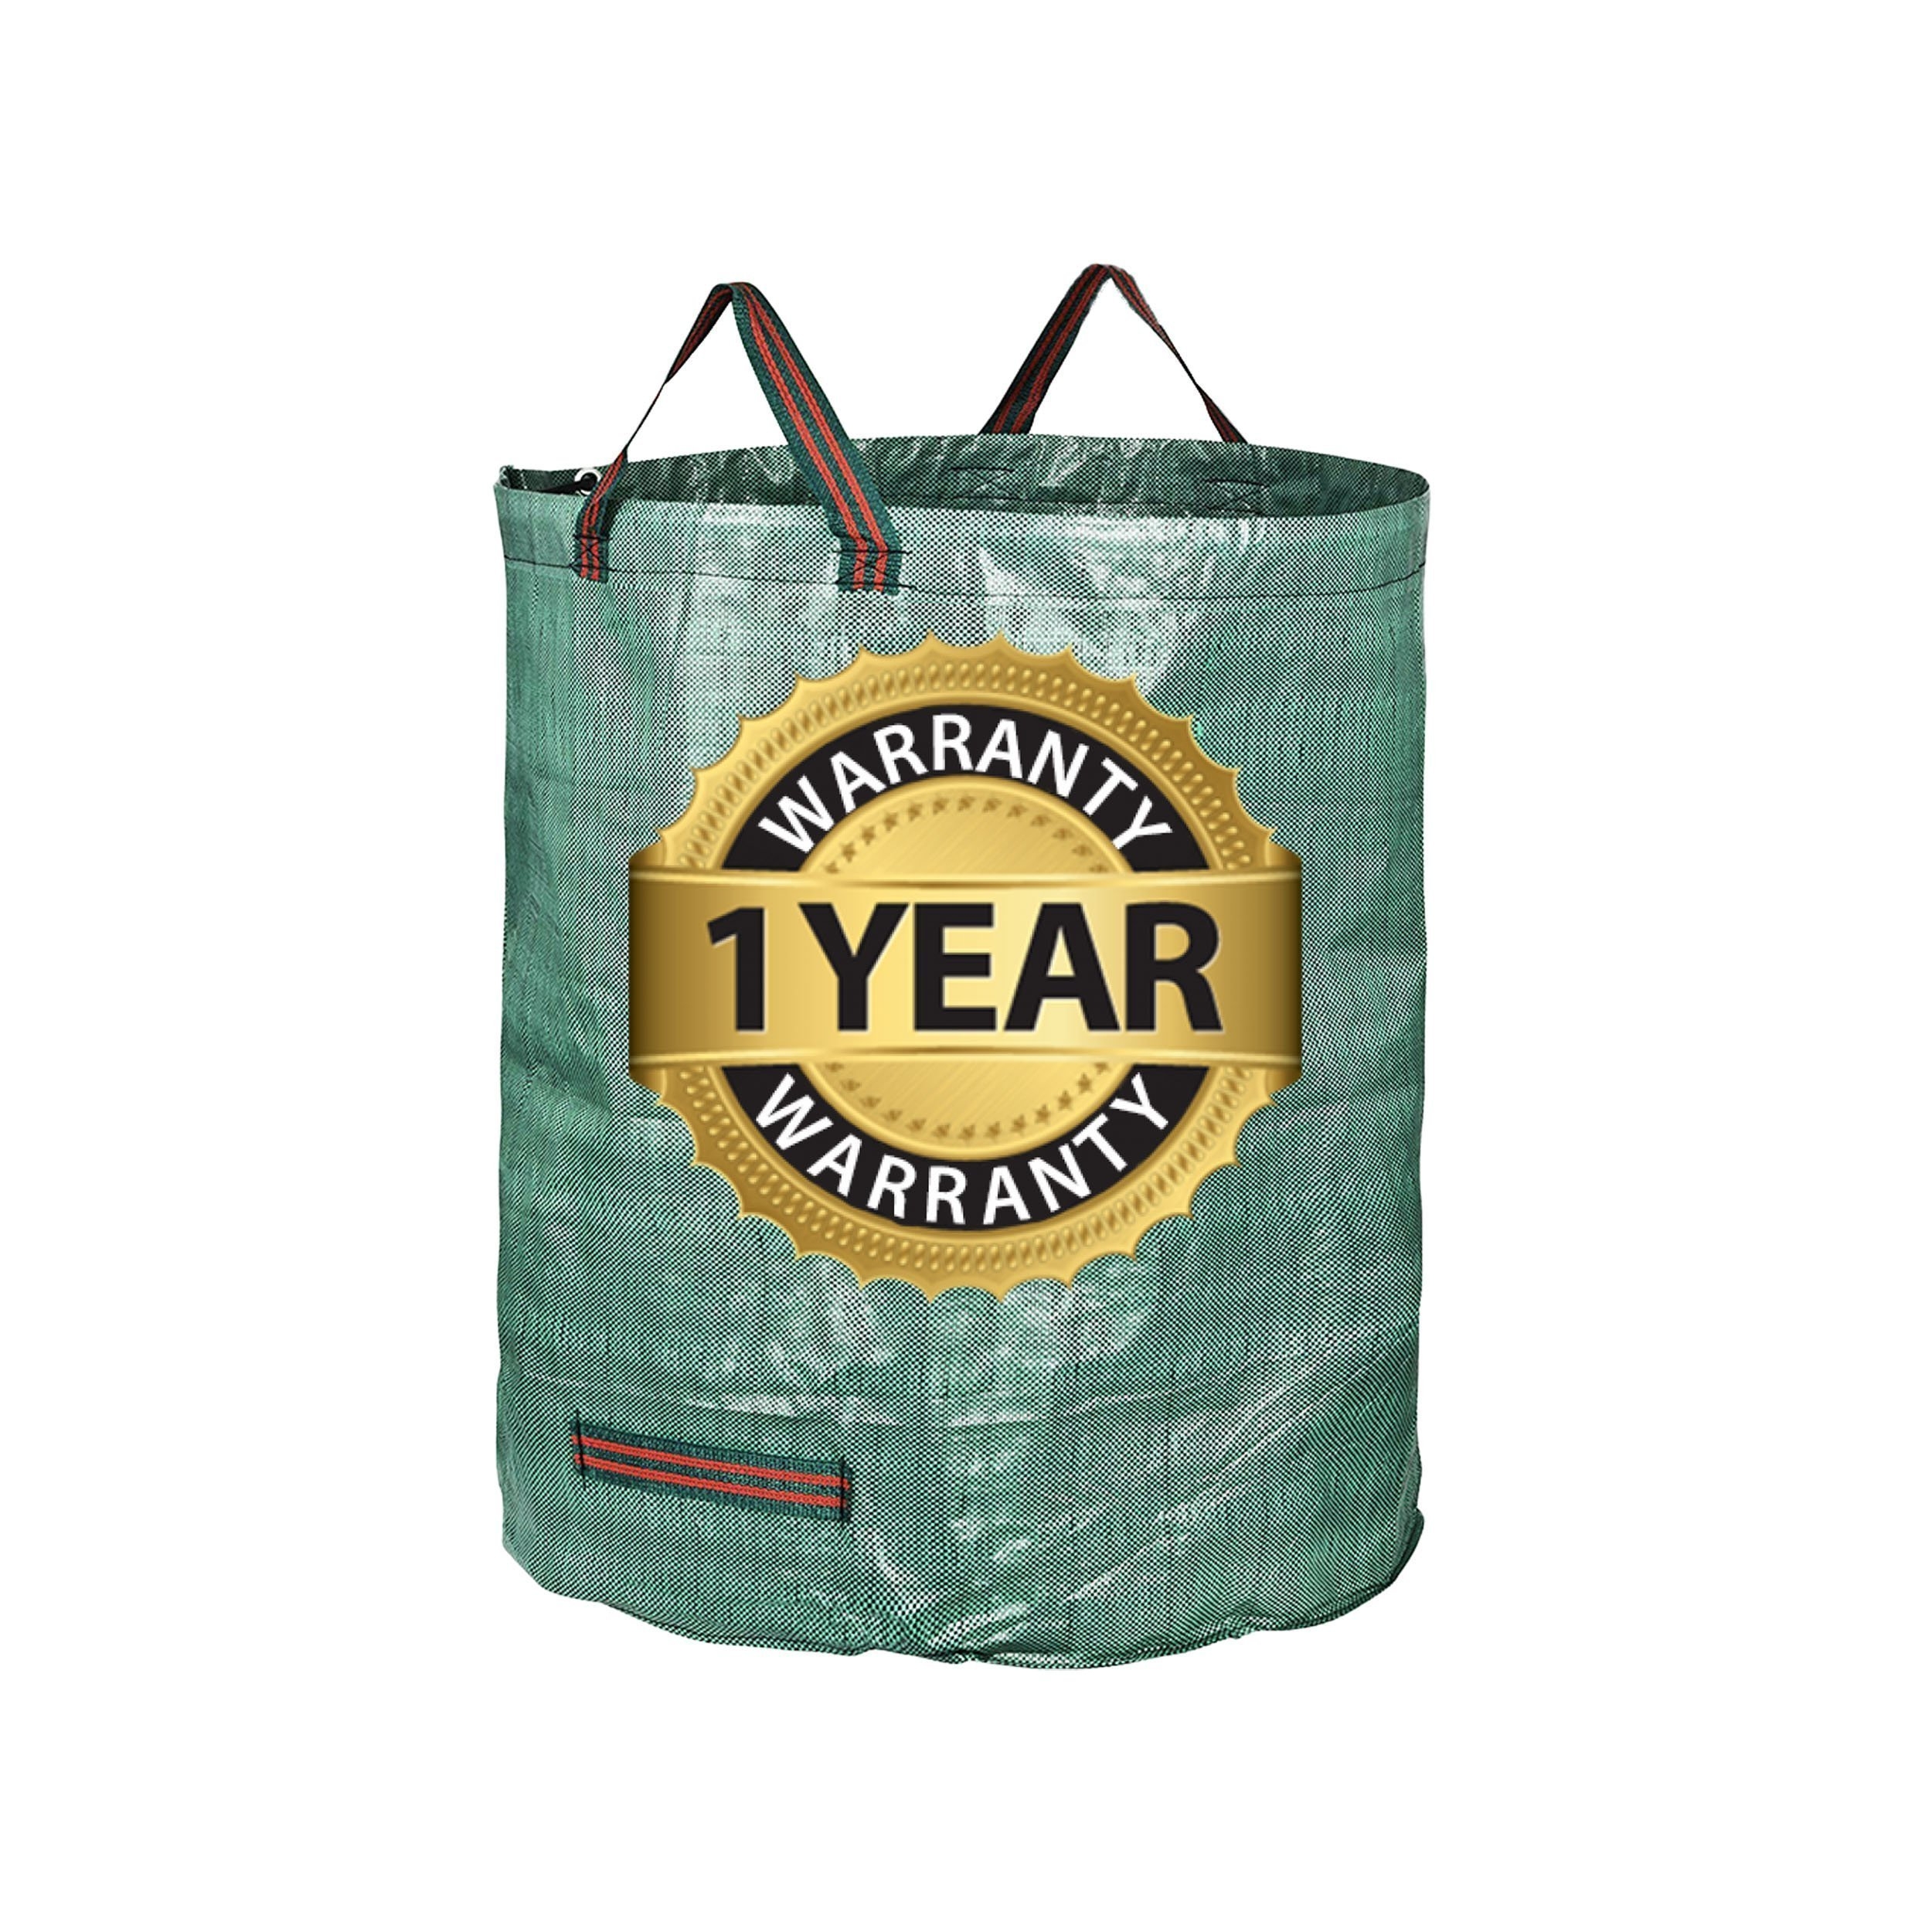 Garden Waste Bag 272L – 1 Year Warranty (1 BAG) – Edinco